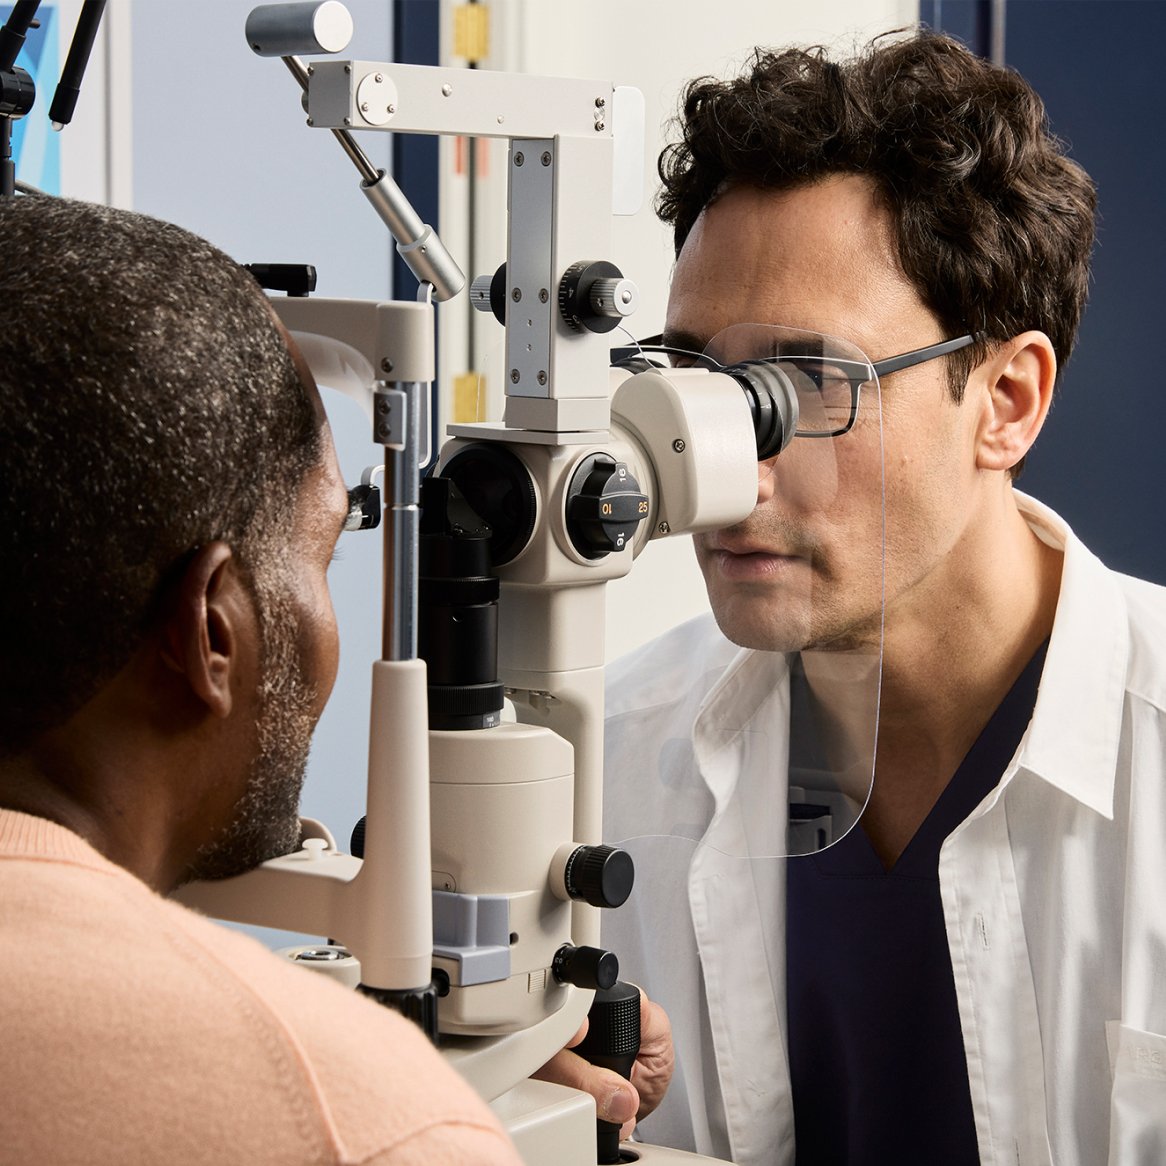 A patient at an eye exam